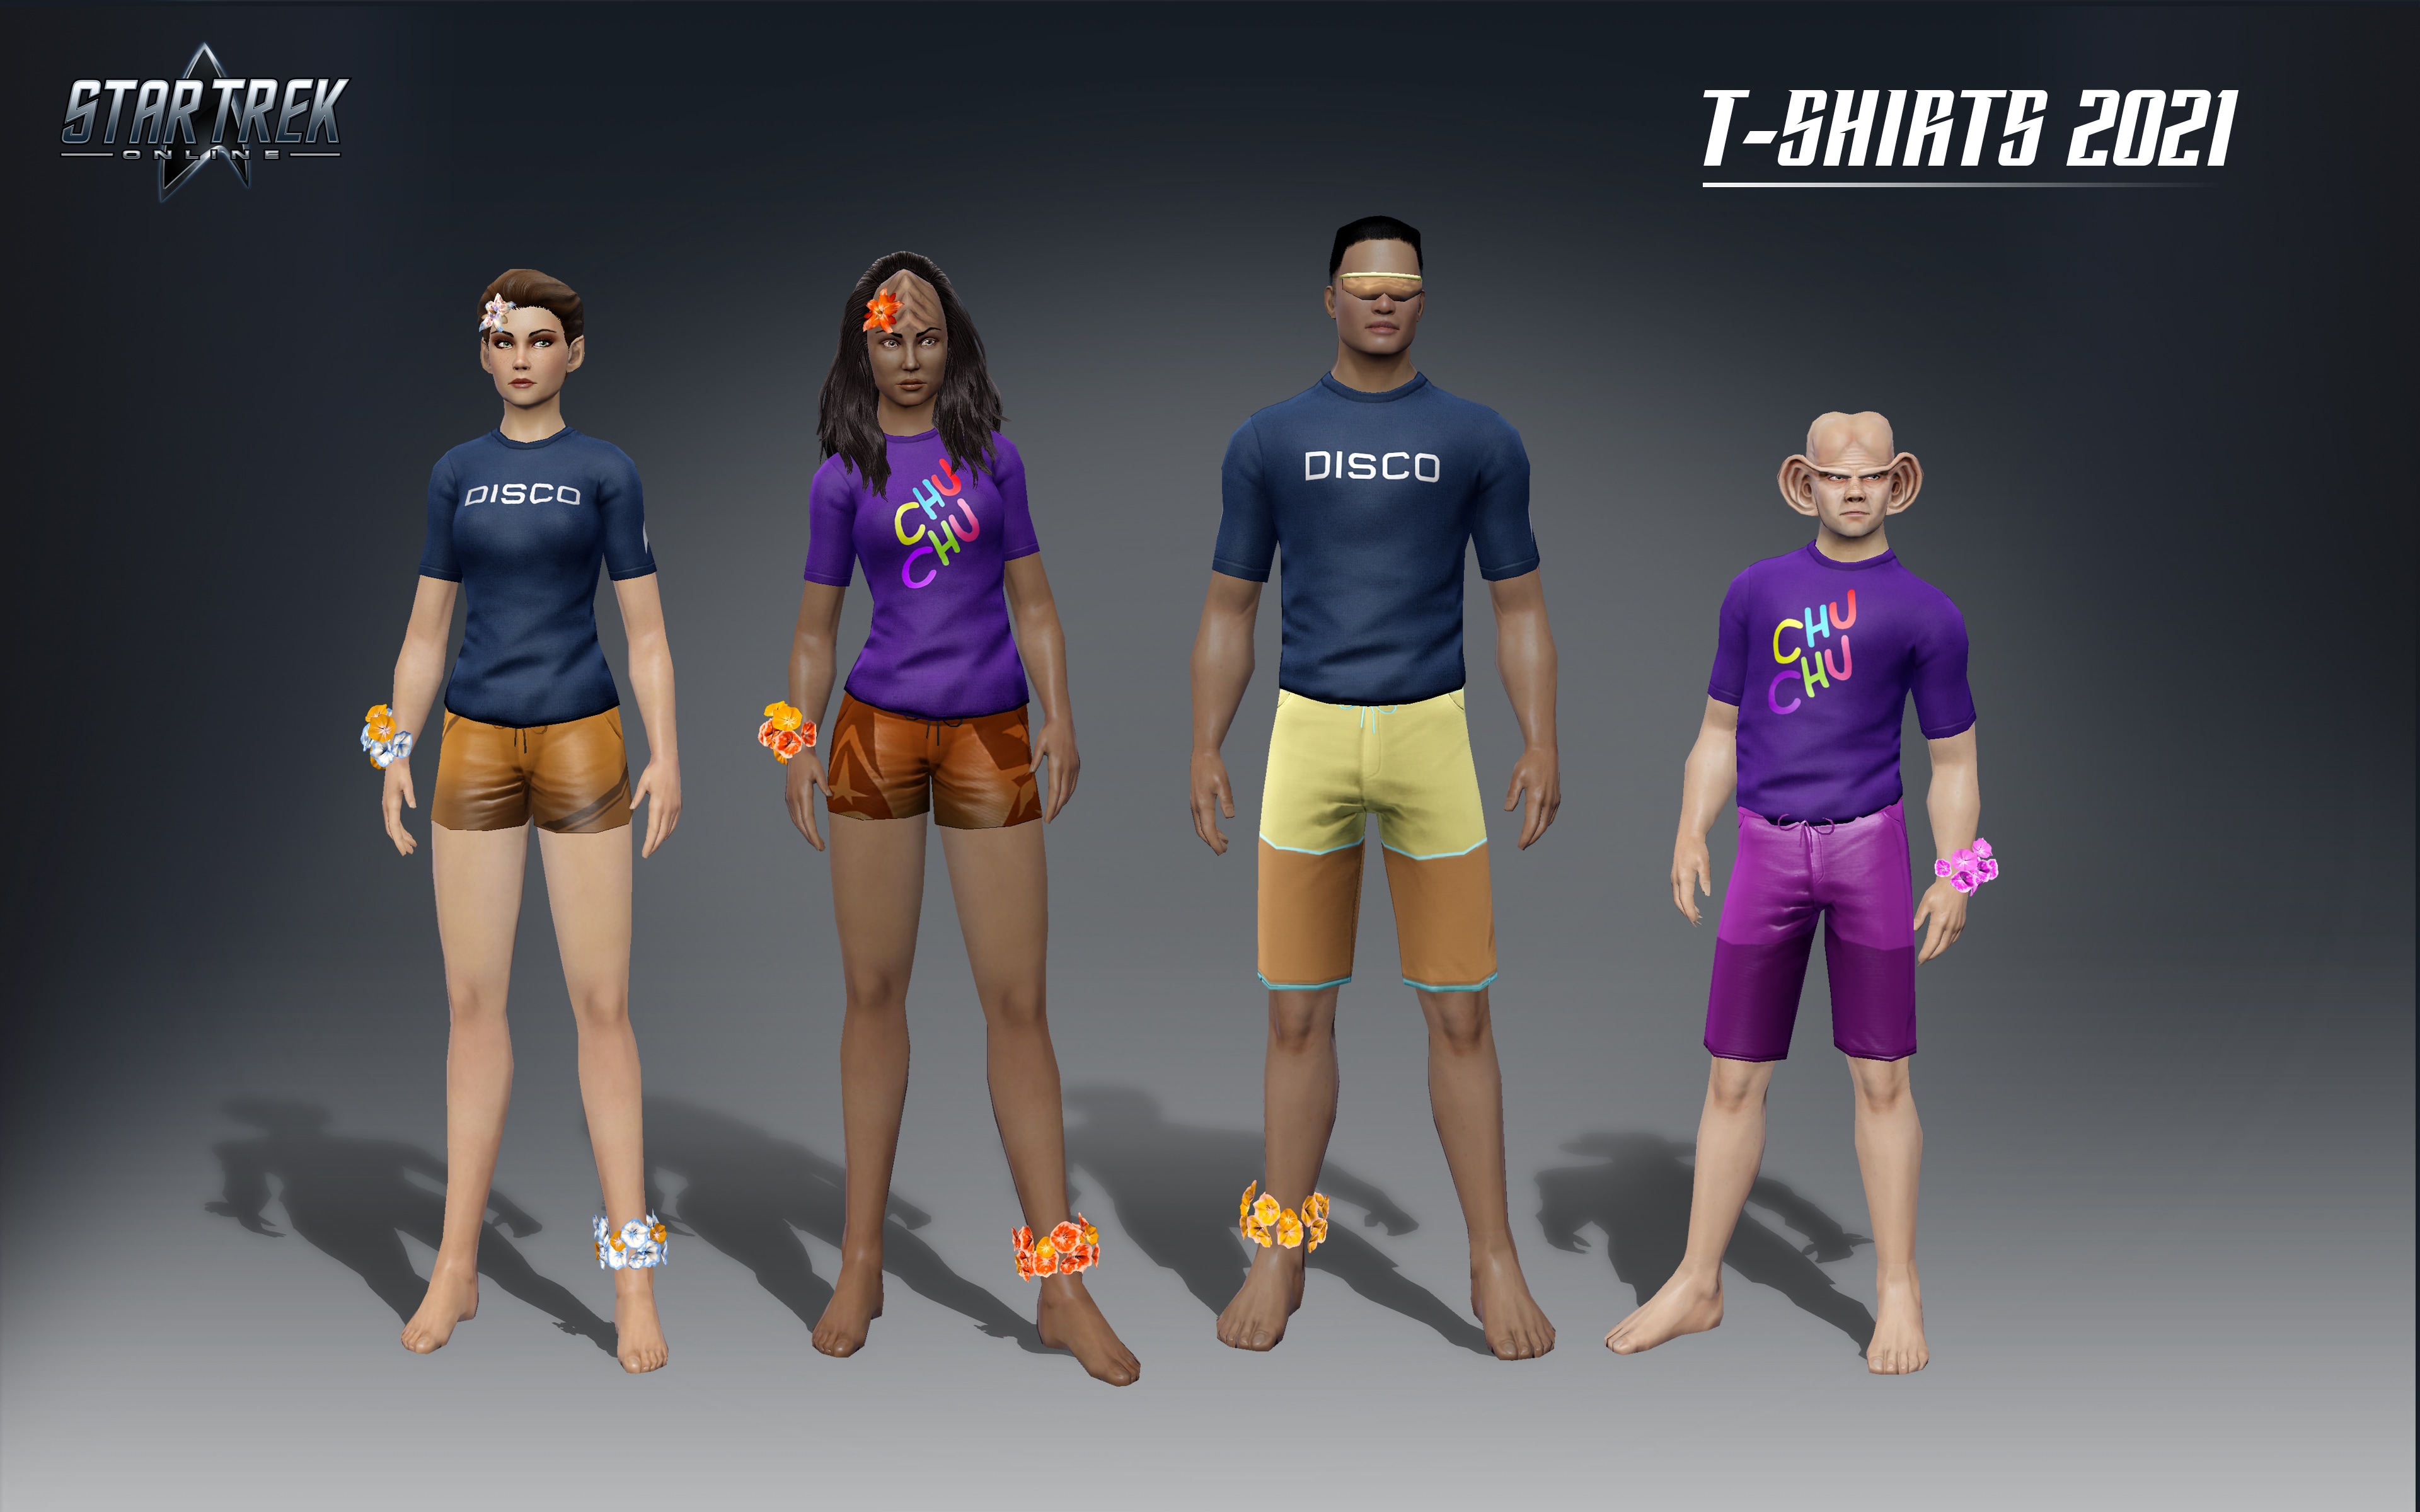 DISCO and Chu Chu Dance shirts from Star Trek Online